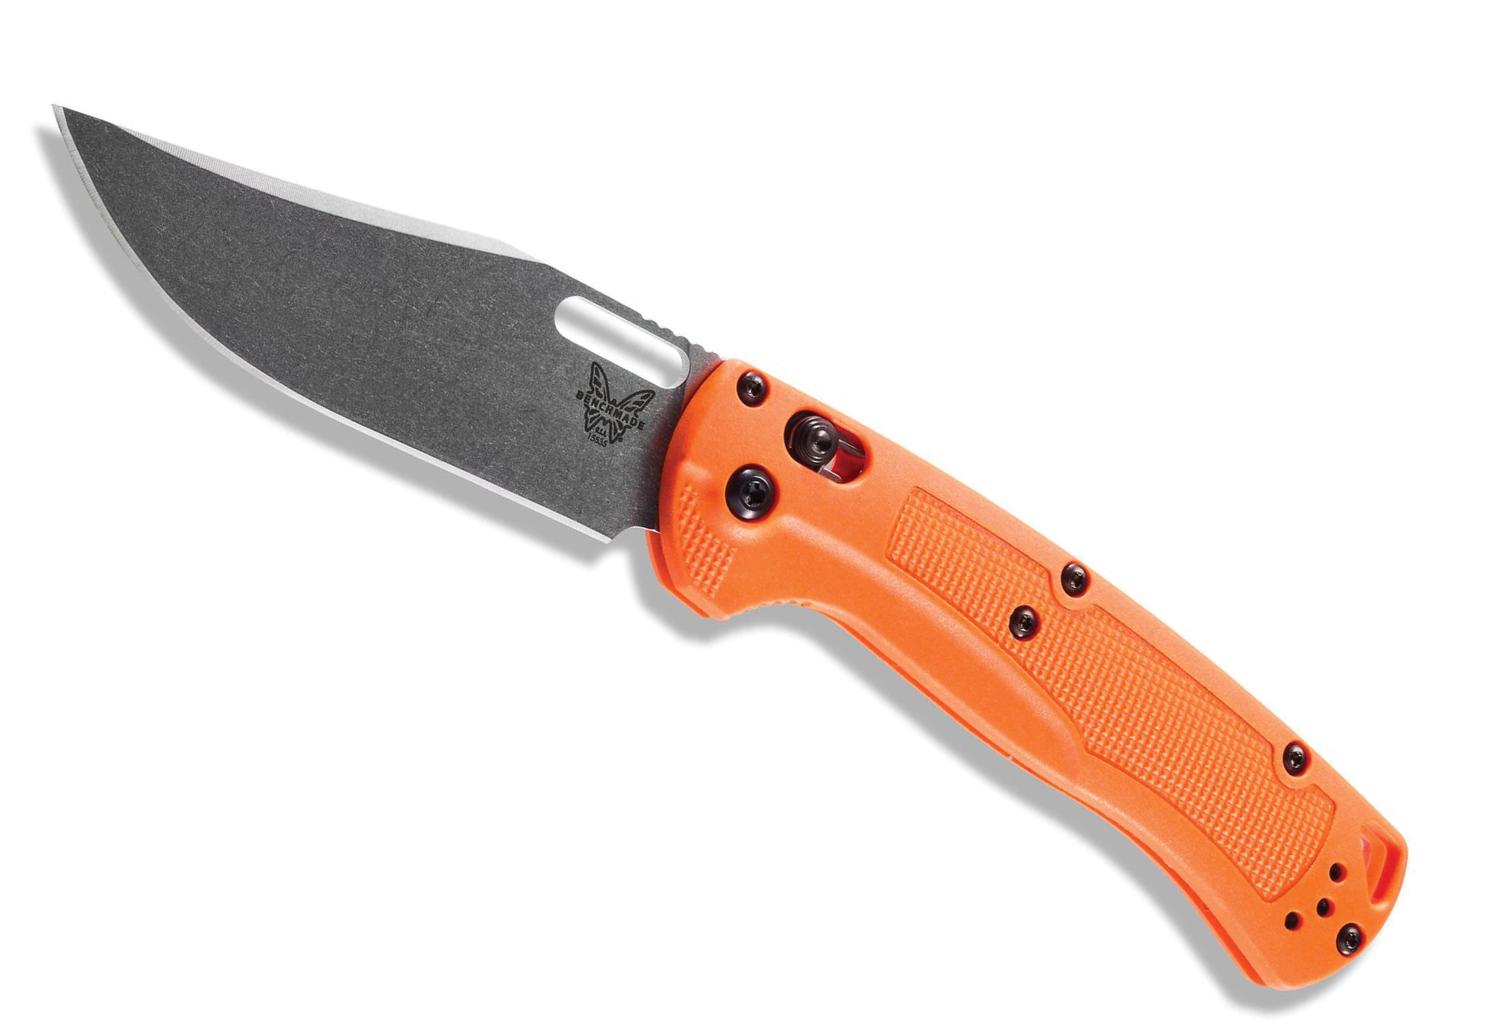  15535 Taggedout Manual Folding Knife 3.5in Cpm- 154 Satin/Orange